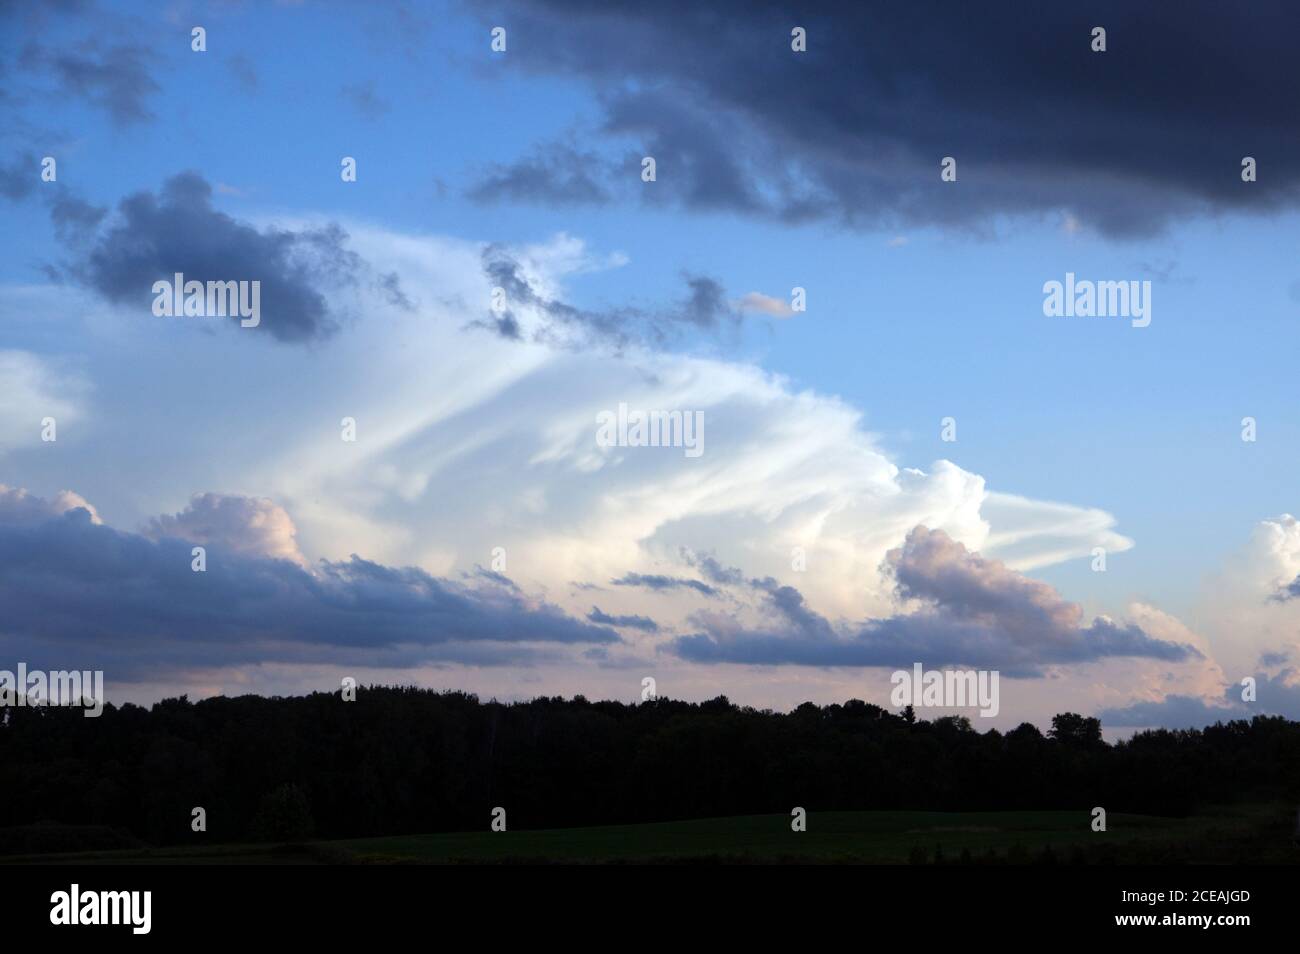 Wechselnde Himmel, windgeblasen turbulenten Cumulus Wolken beneatrh dunkel bedrohlich schwarze Wolke. Stockfoto